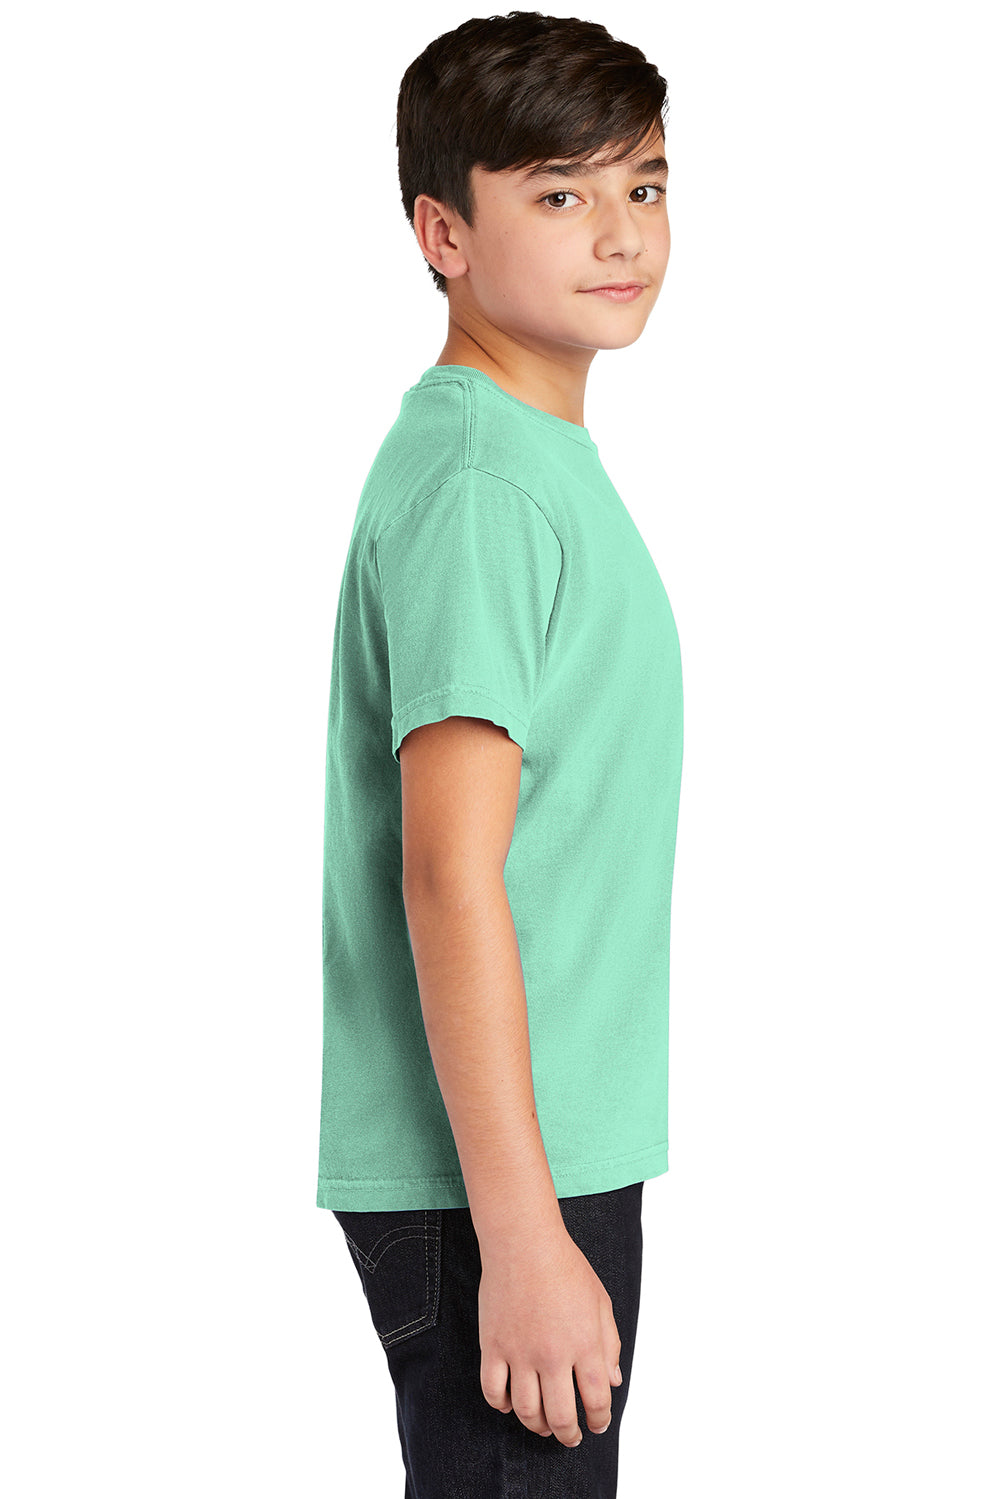 Comfort Colors 9018/C9018 Youth Short Sleeve Crewneck T-Shirt Island Reef Green Side